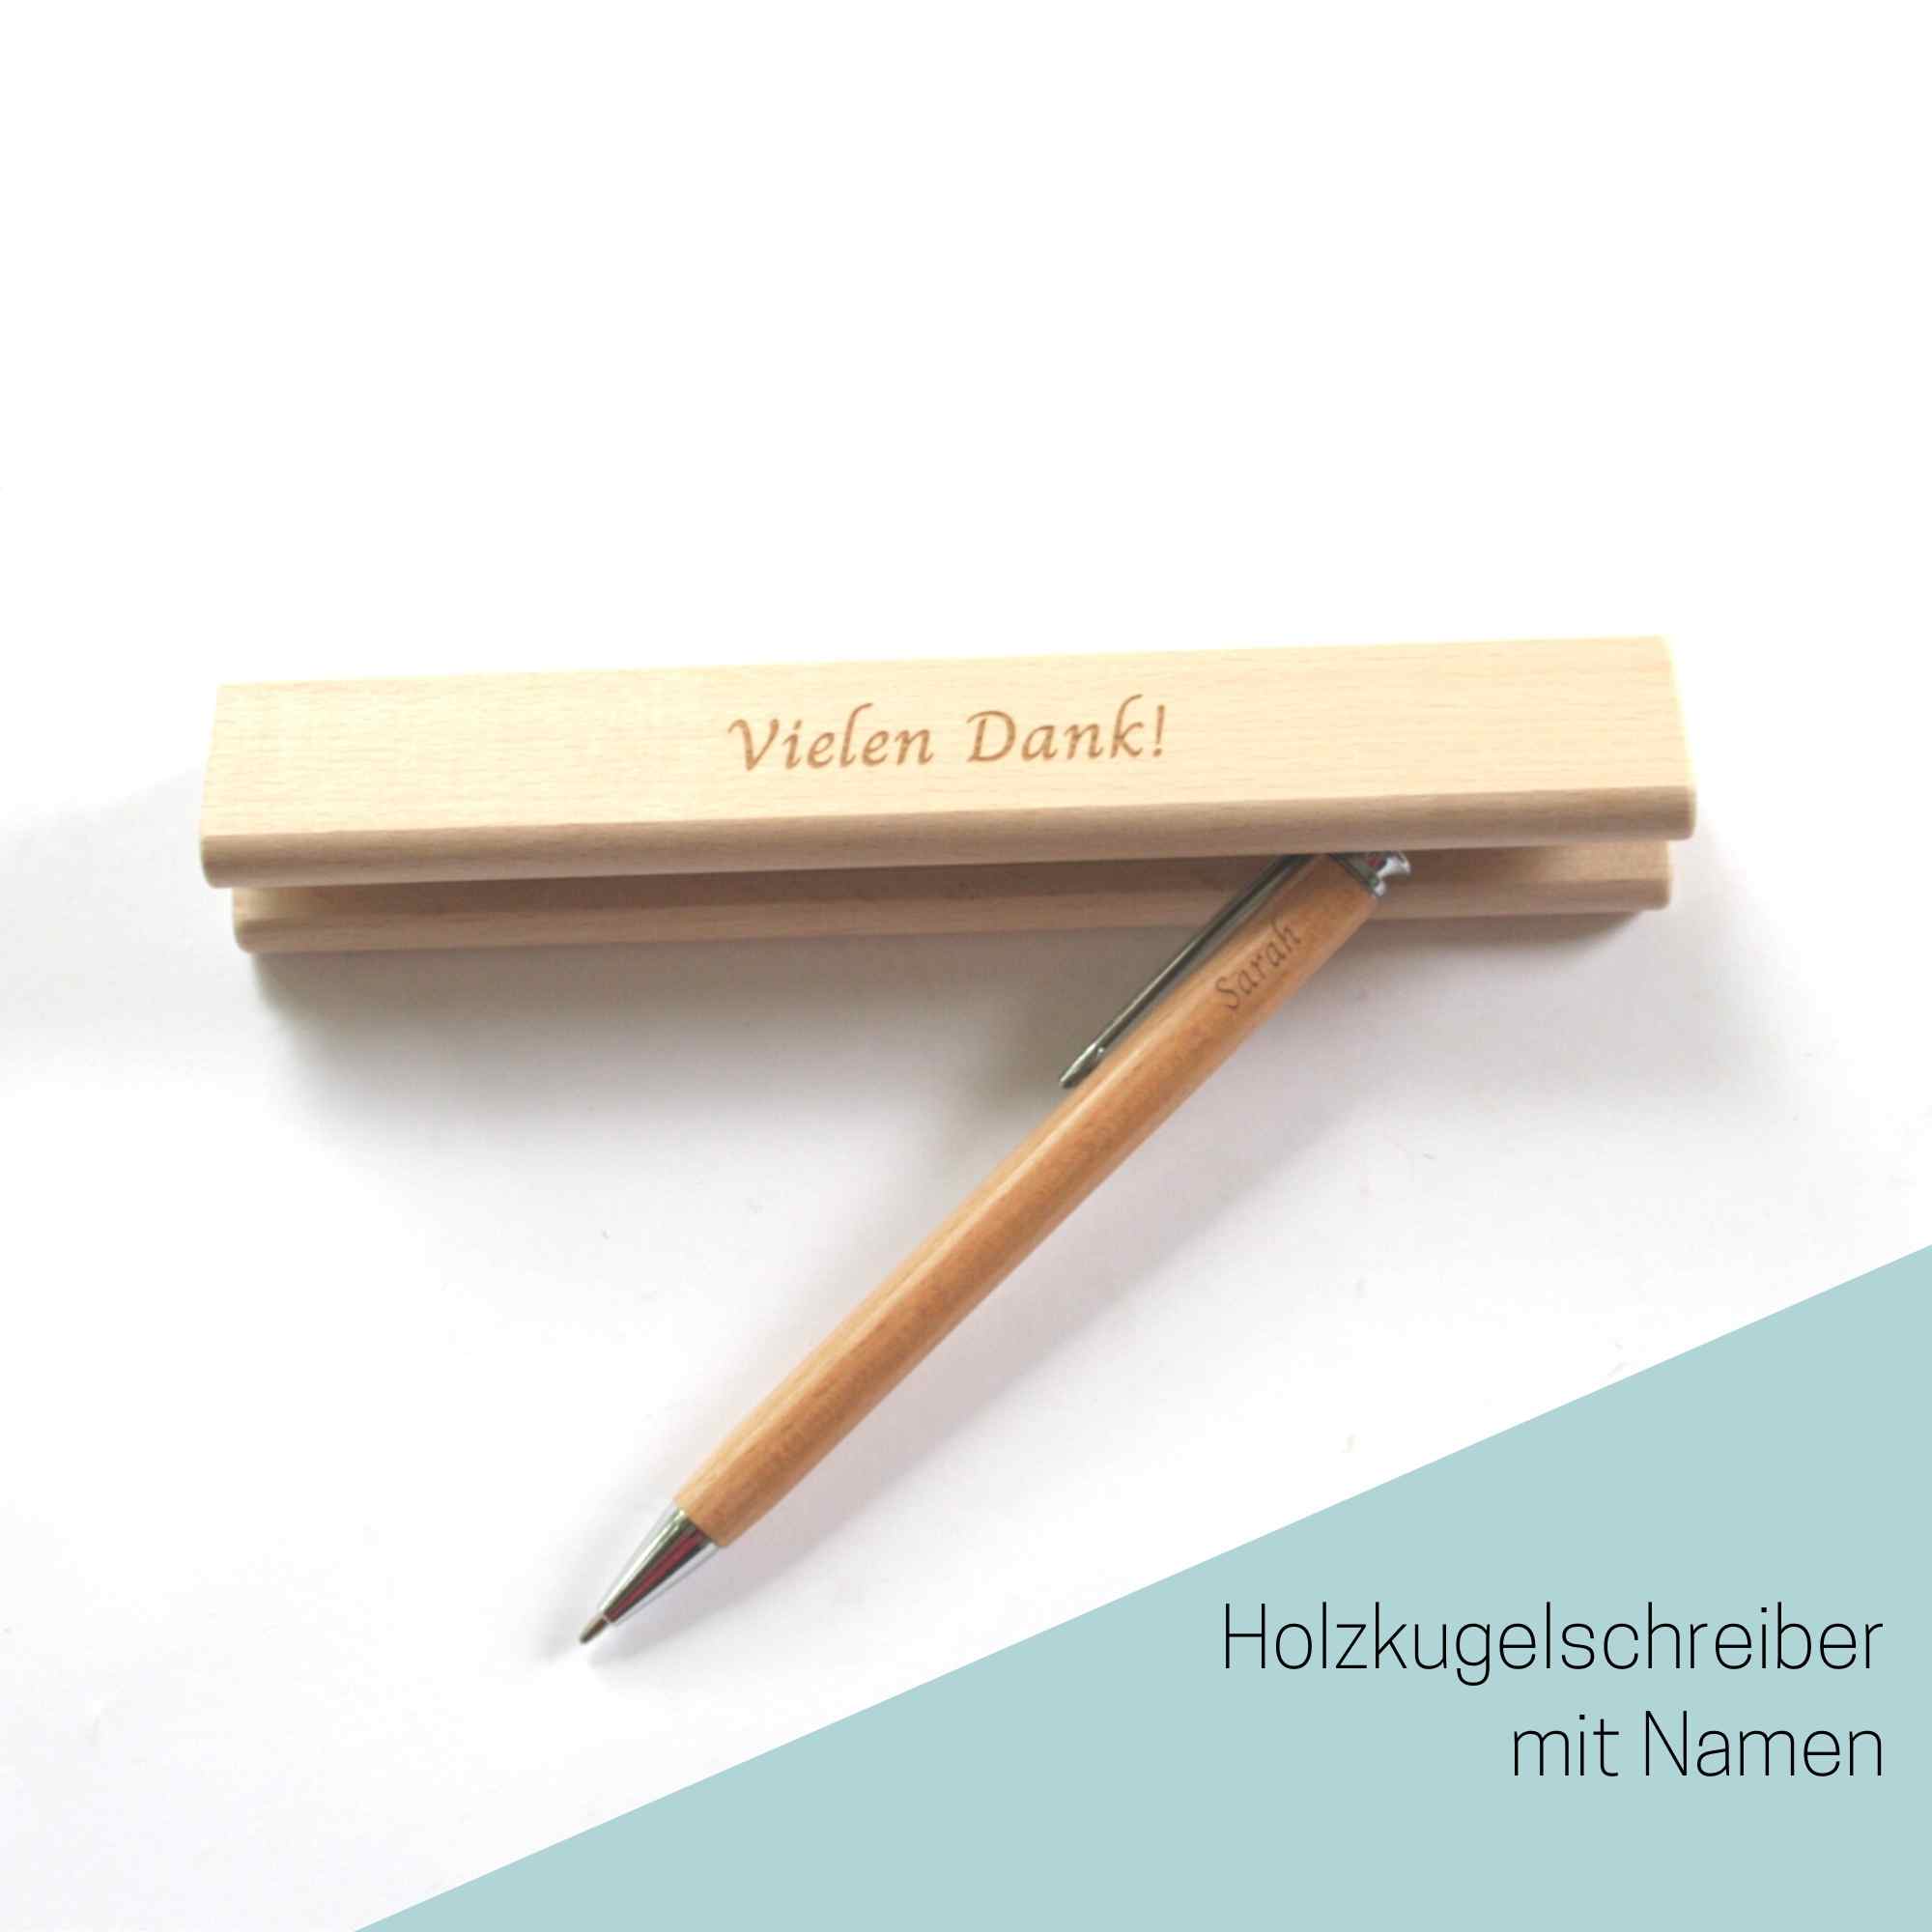 Dankeschön Geschenk - Holzkugelschreiber und Holzbox beschriftet